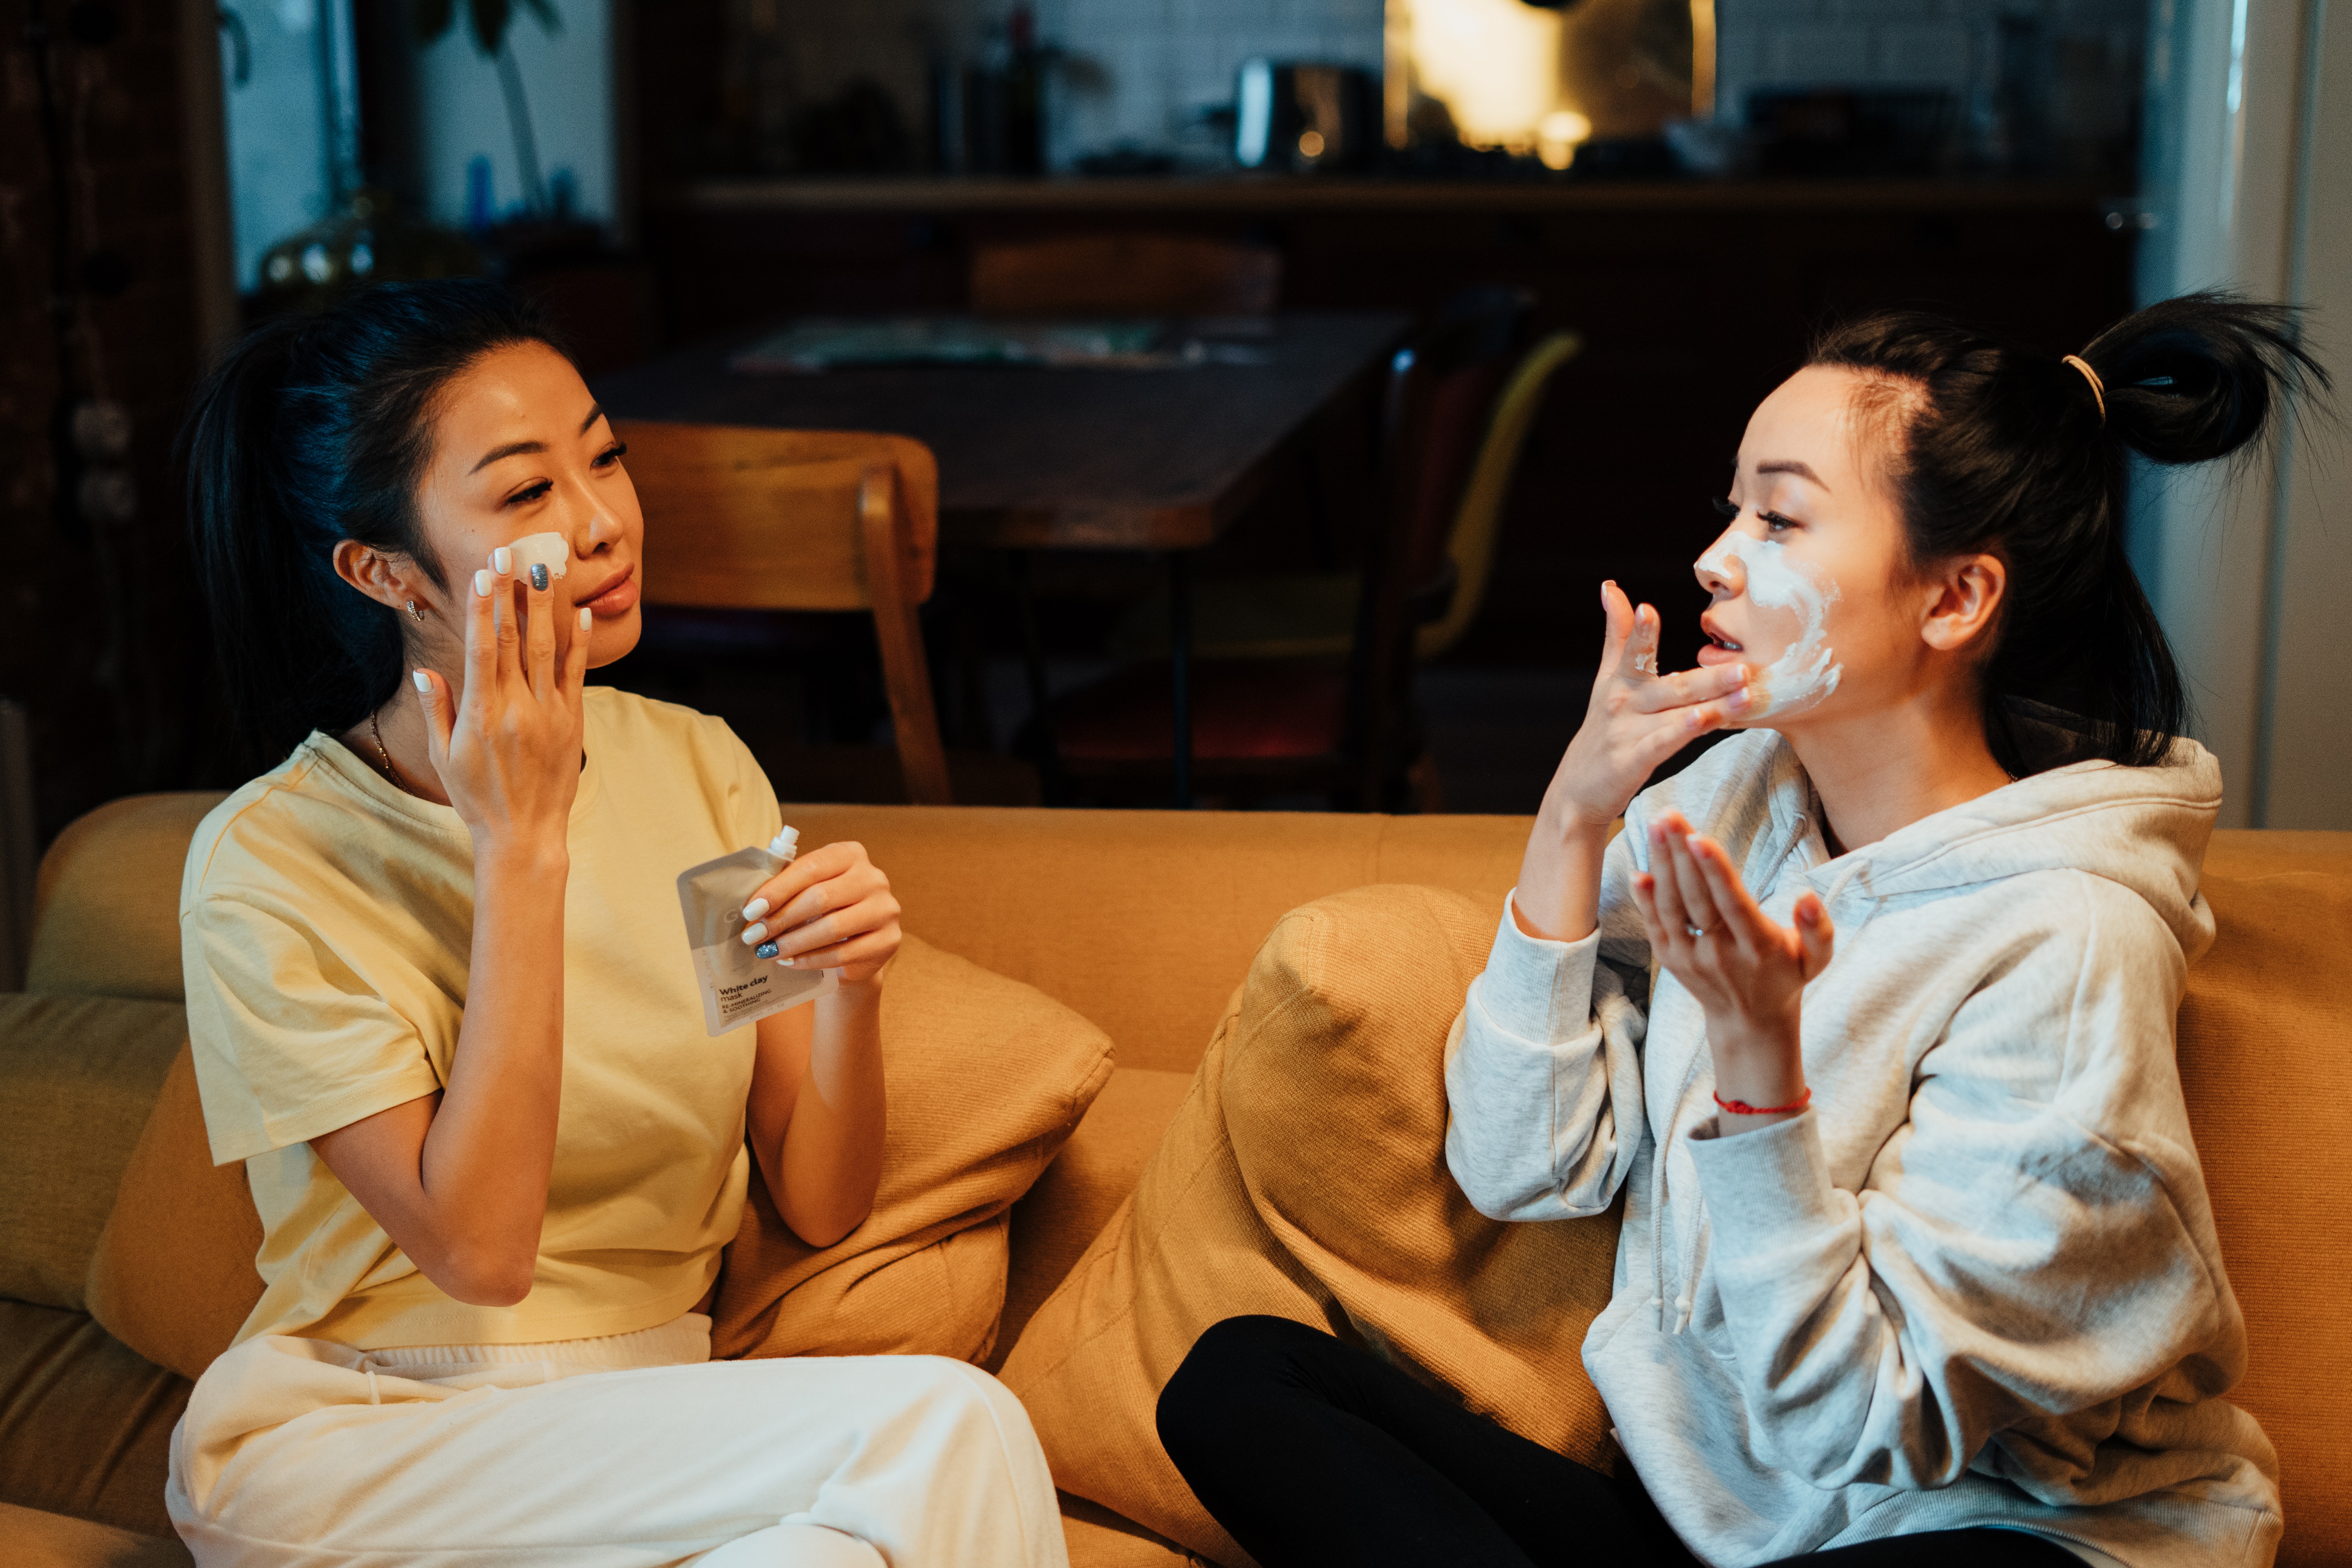 Two women applying face masksin a living room | Source: Pexels